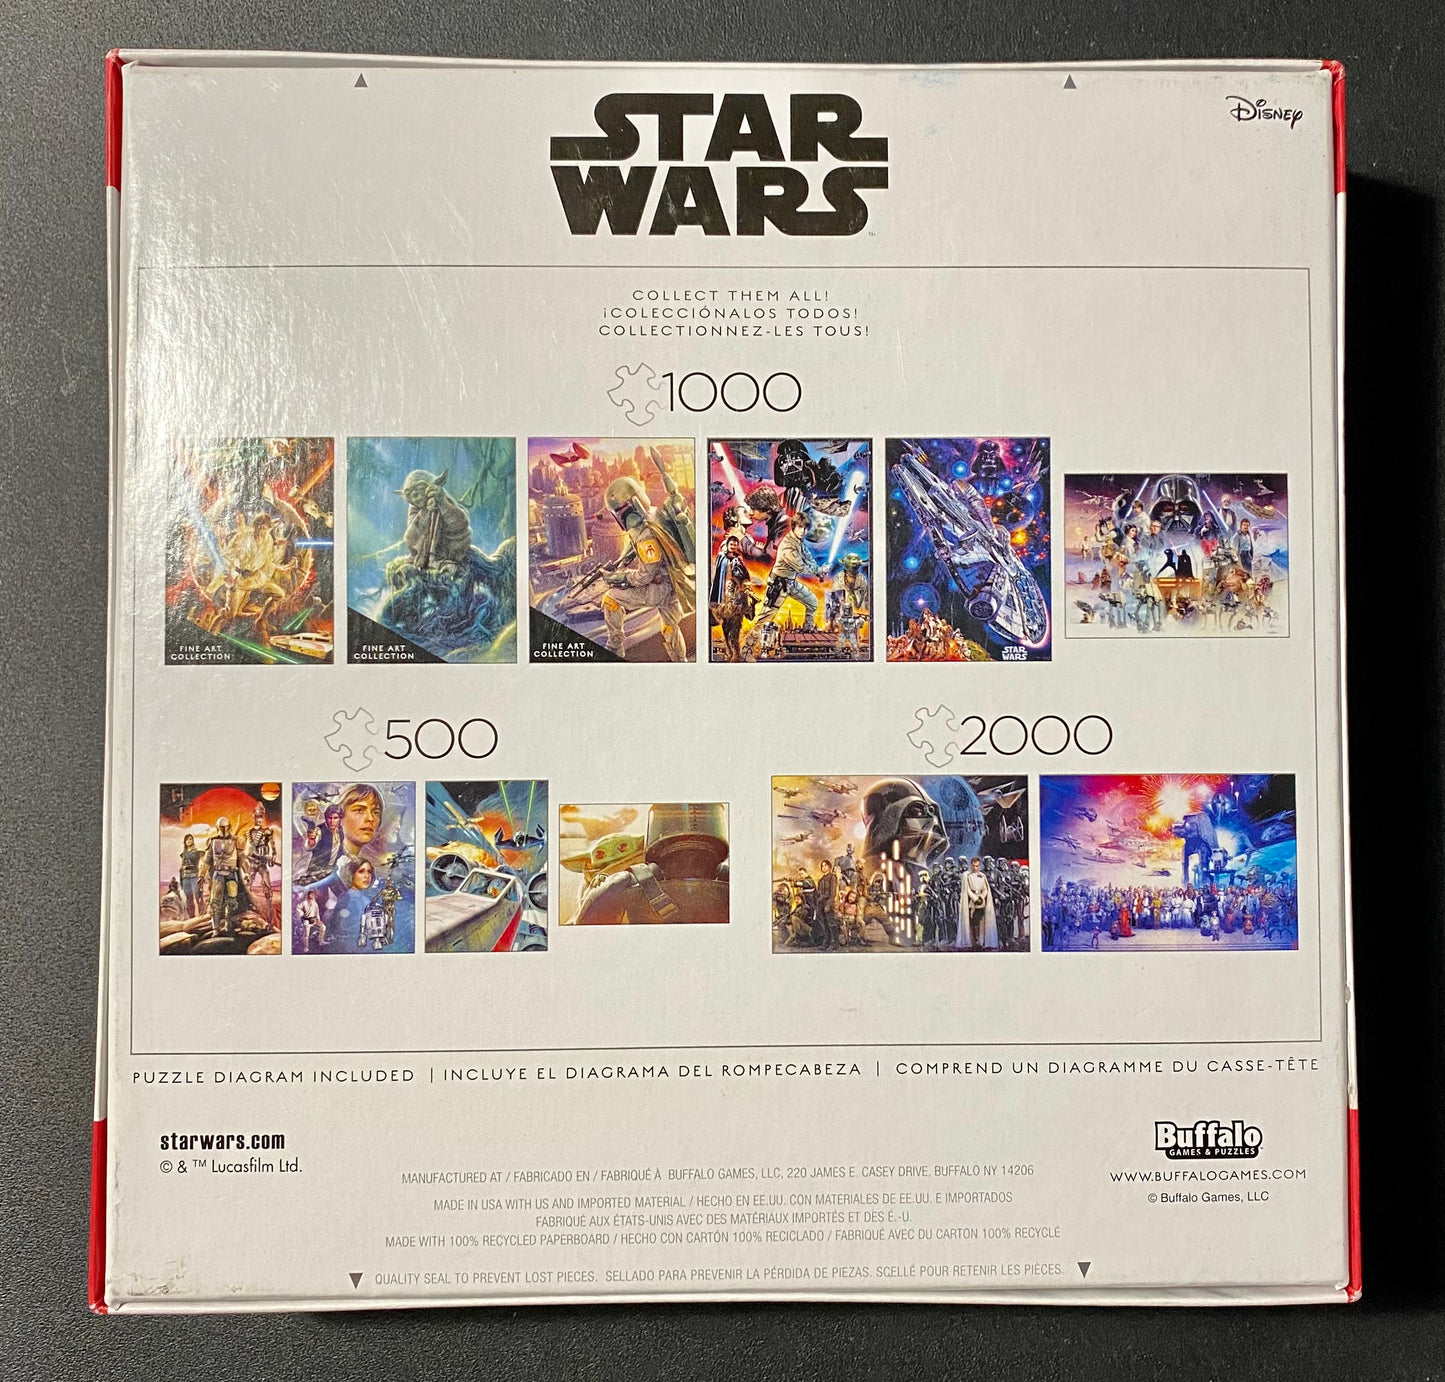 Star Wars Mandalorian The Child Baby Yoda 500 Pcs Jigsaw Puzzle 03368